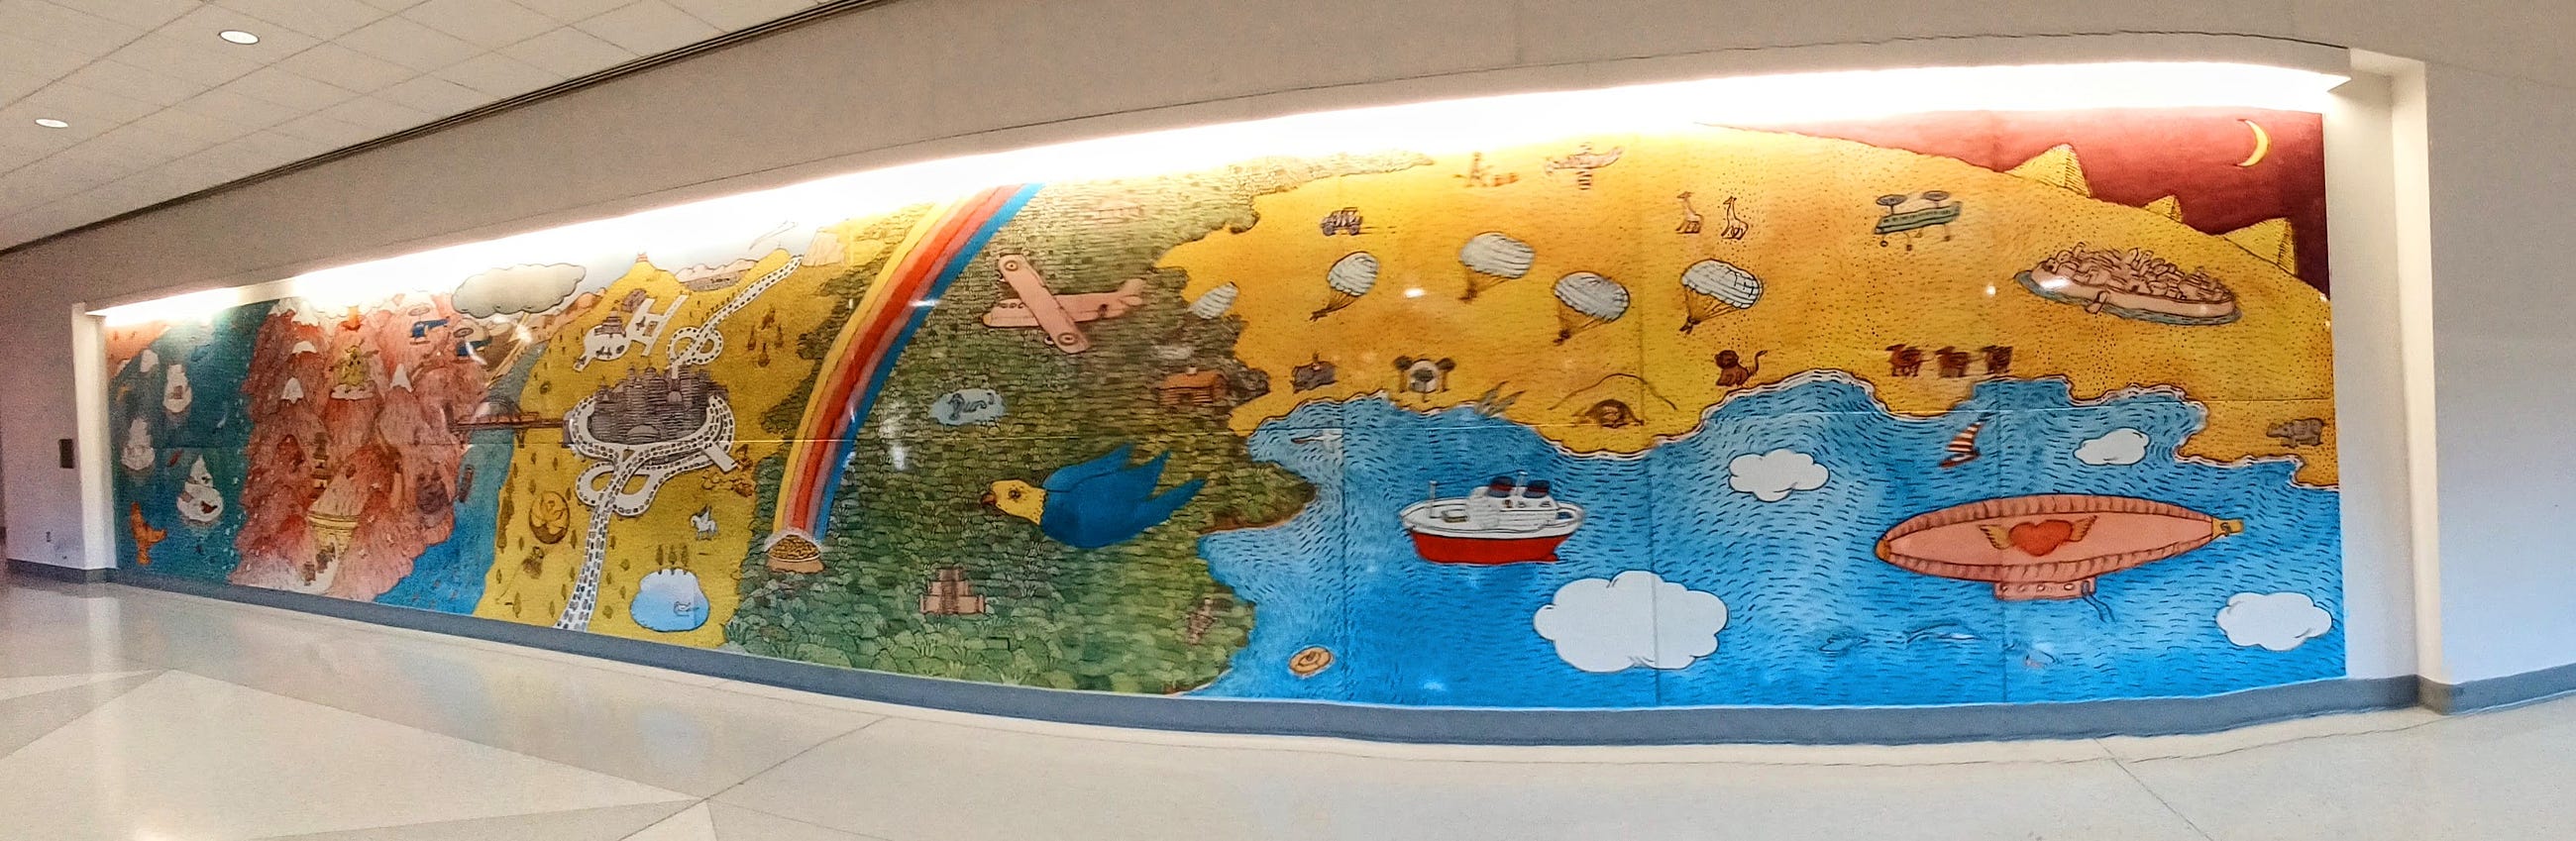 Art at an airport